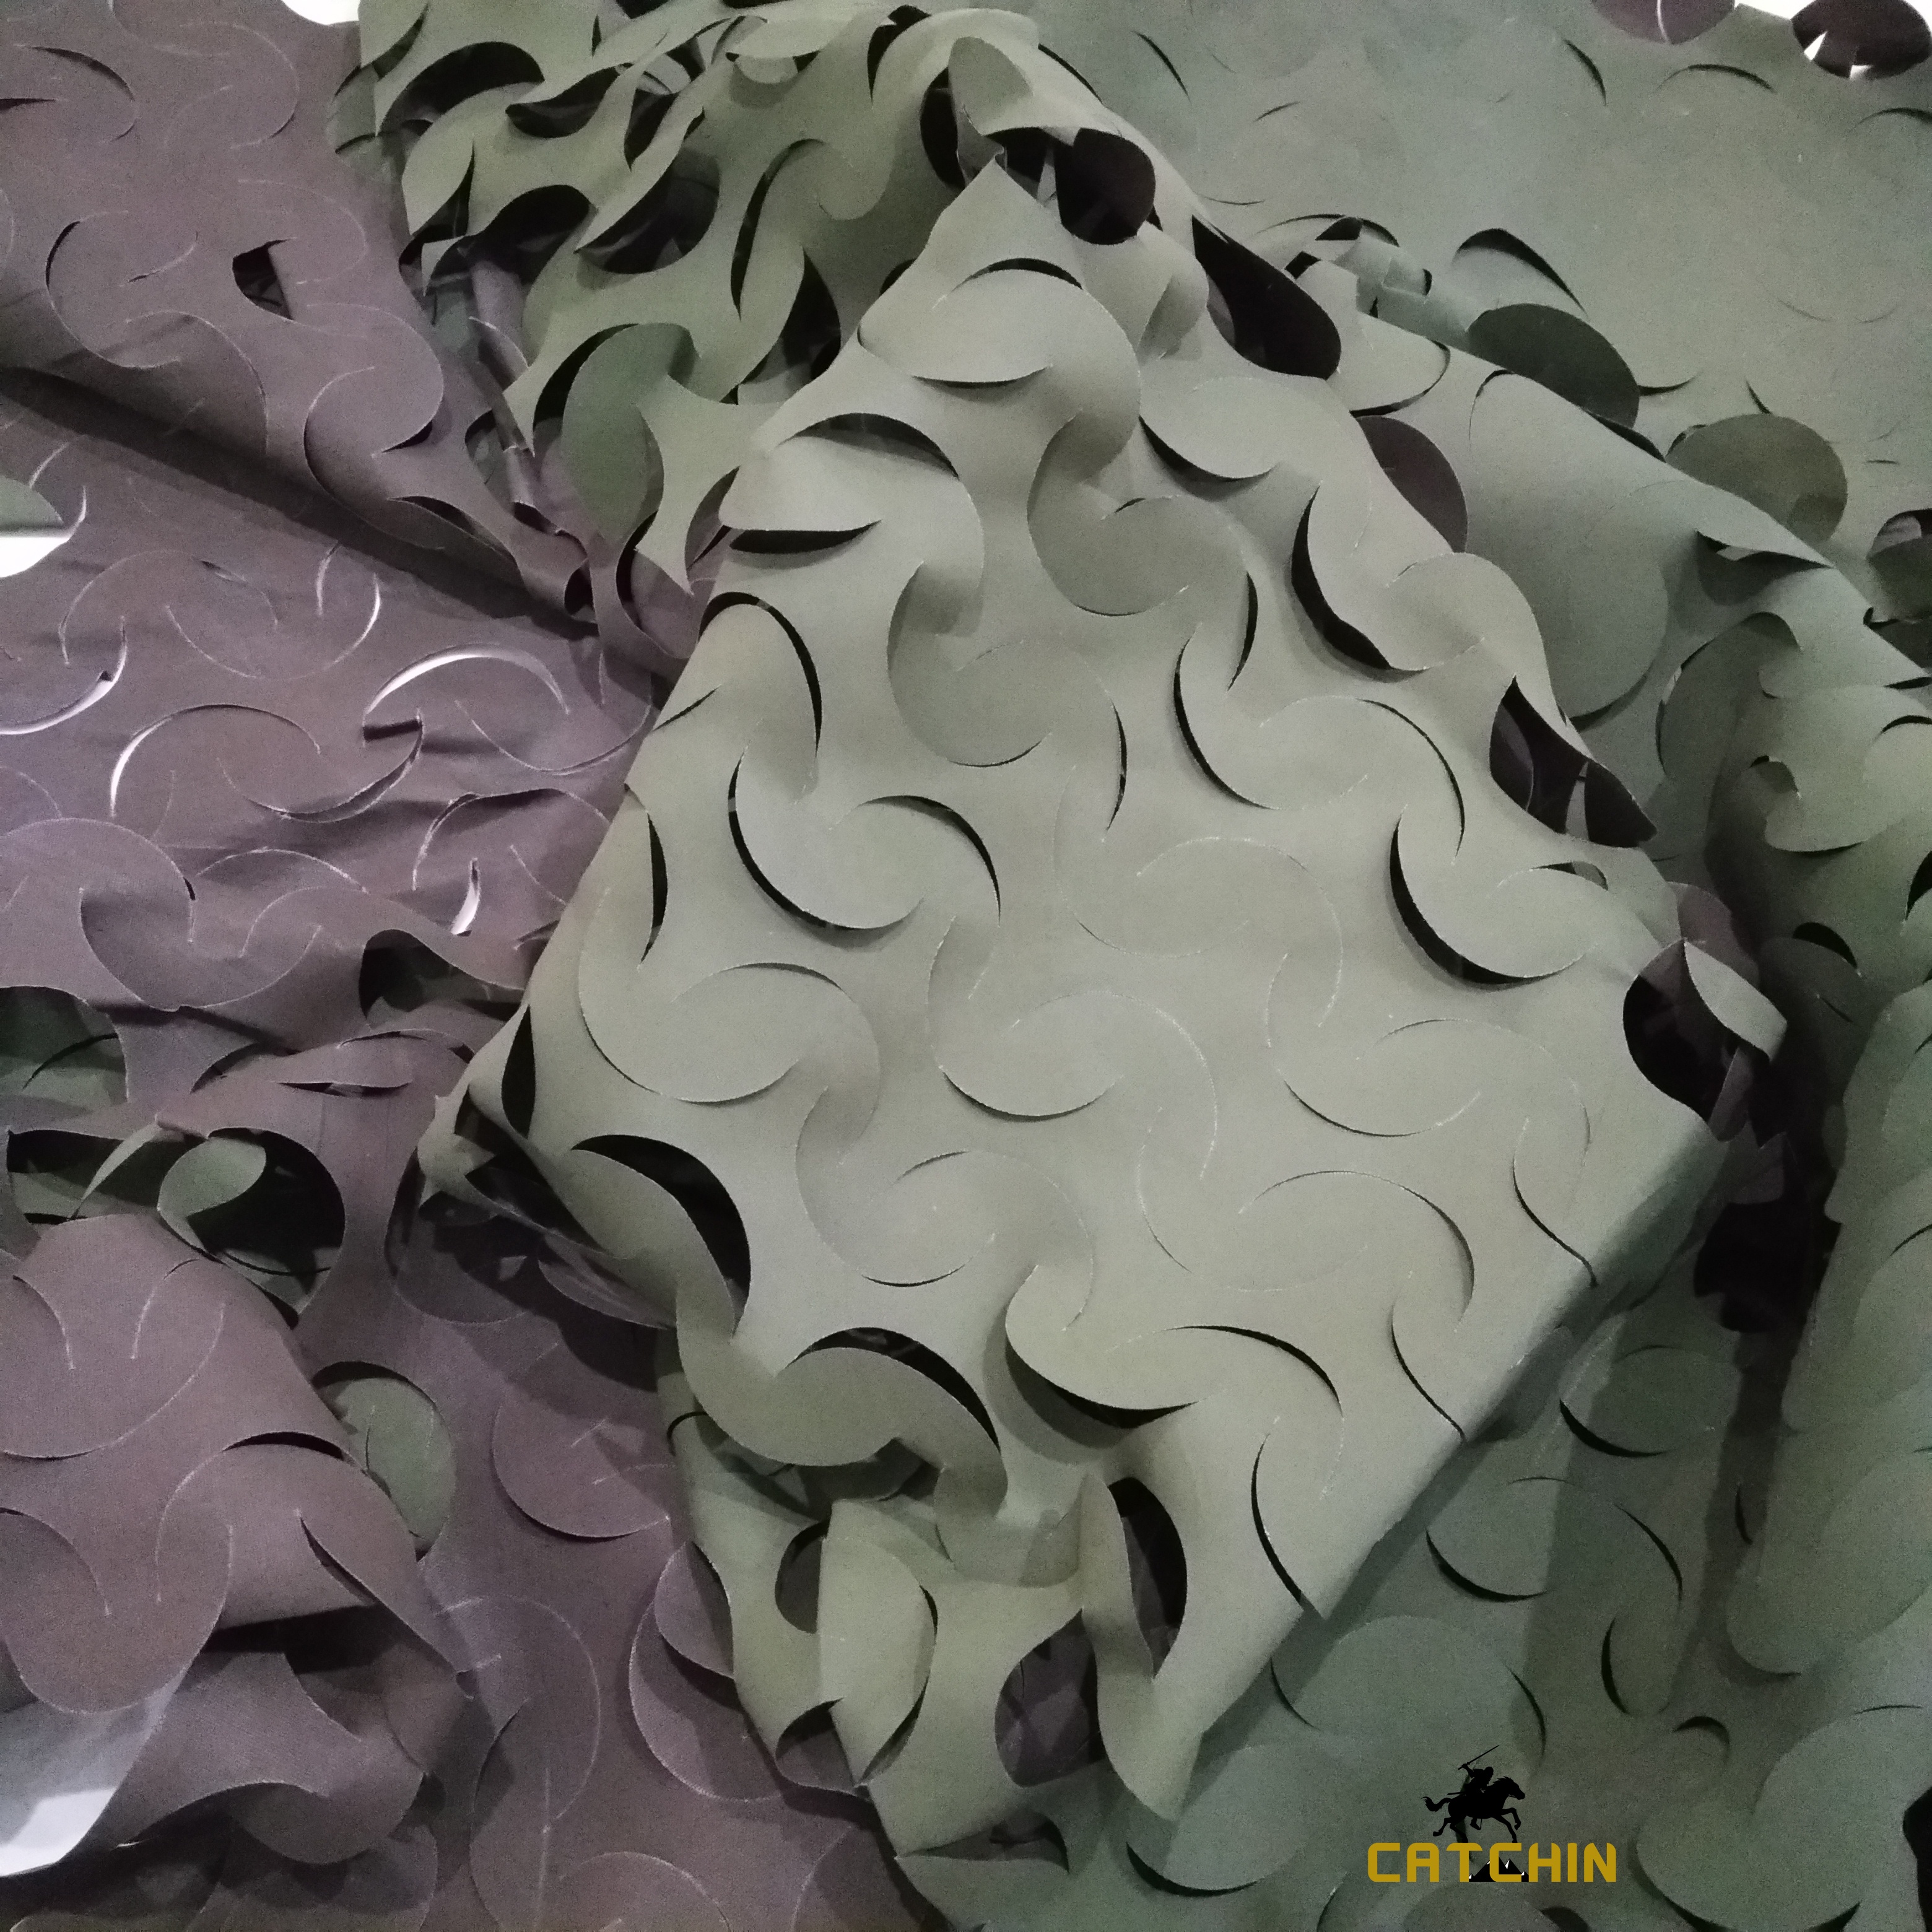 Green&Brown camo netting camouflage net military/Bi-directional camouflage net